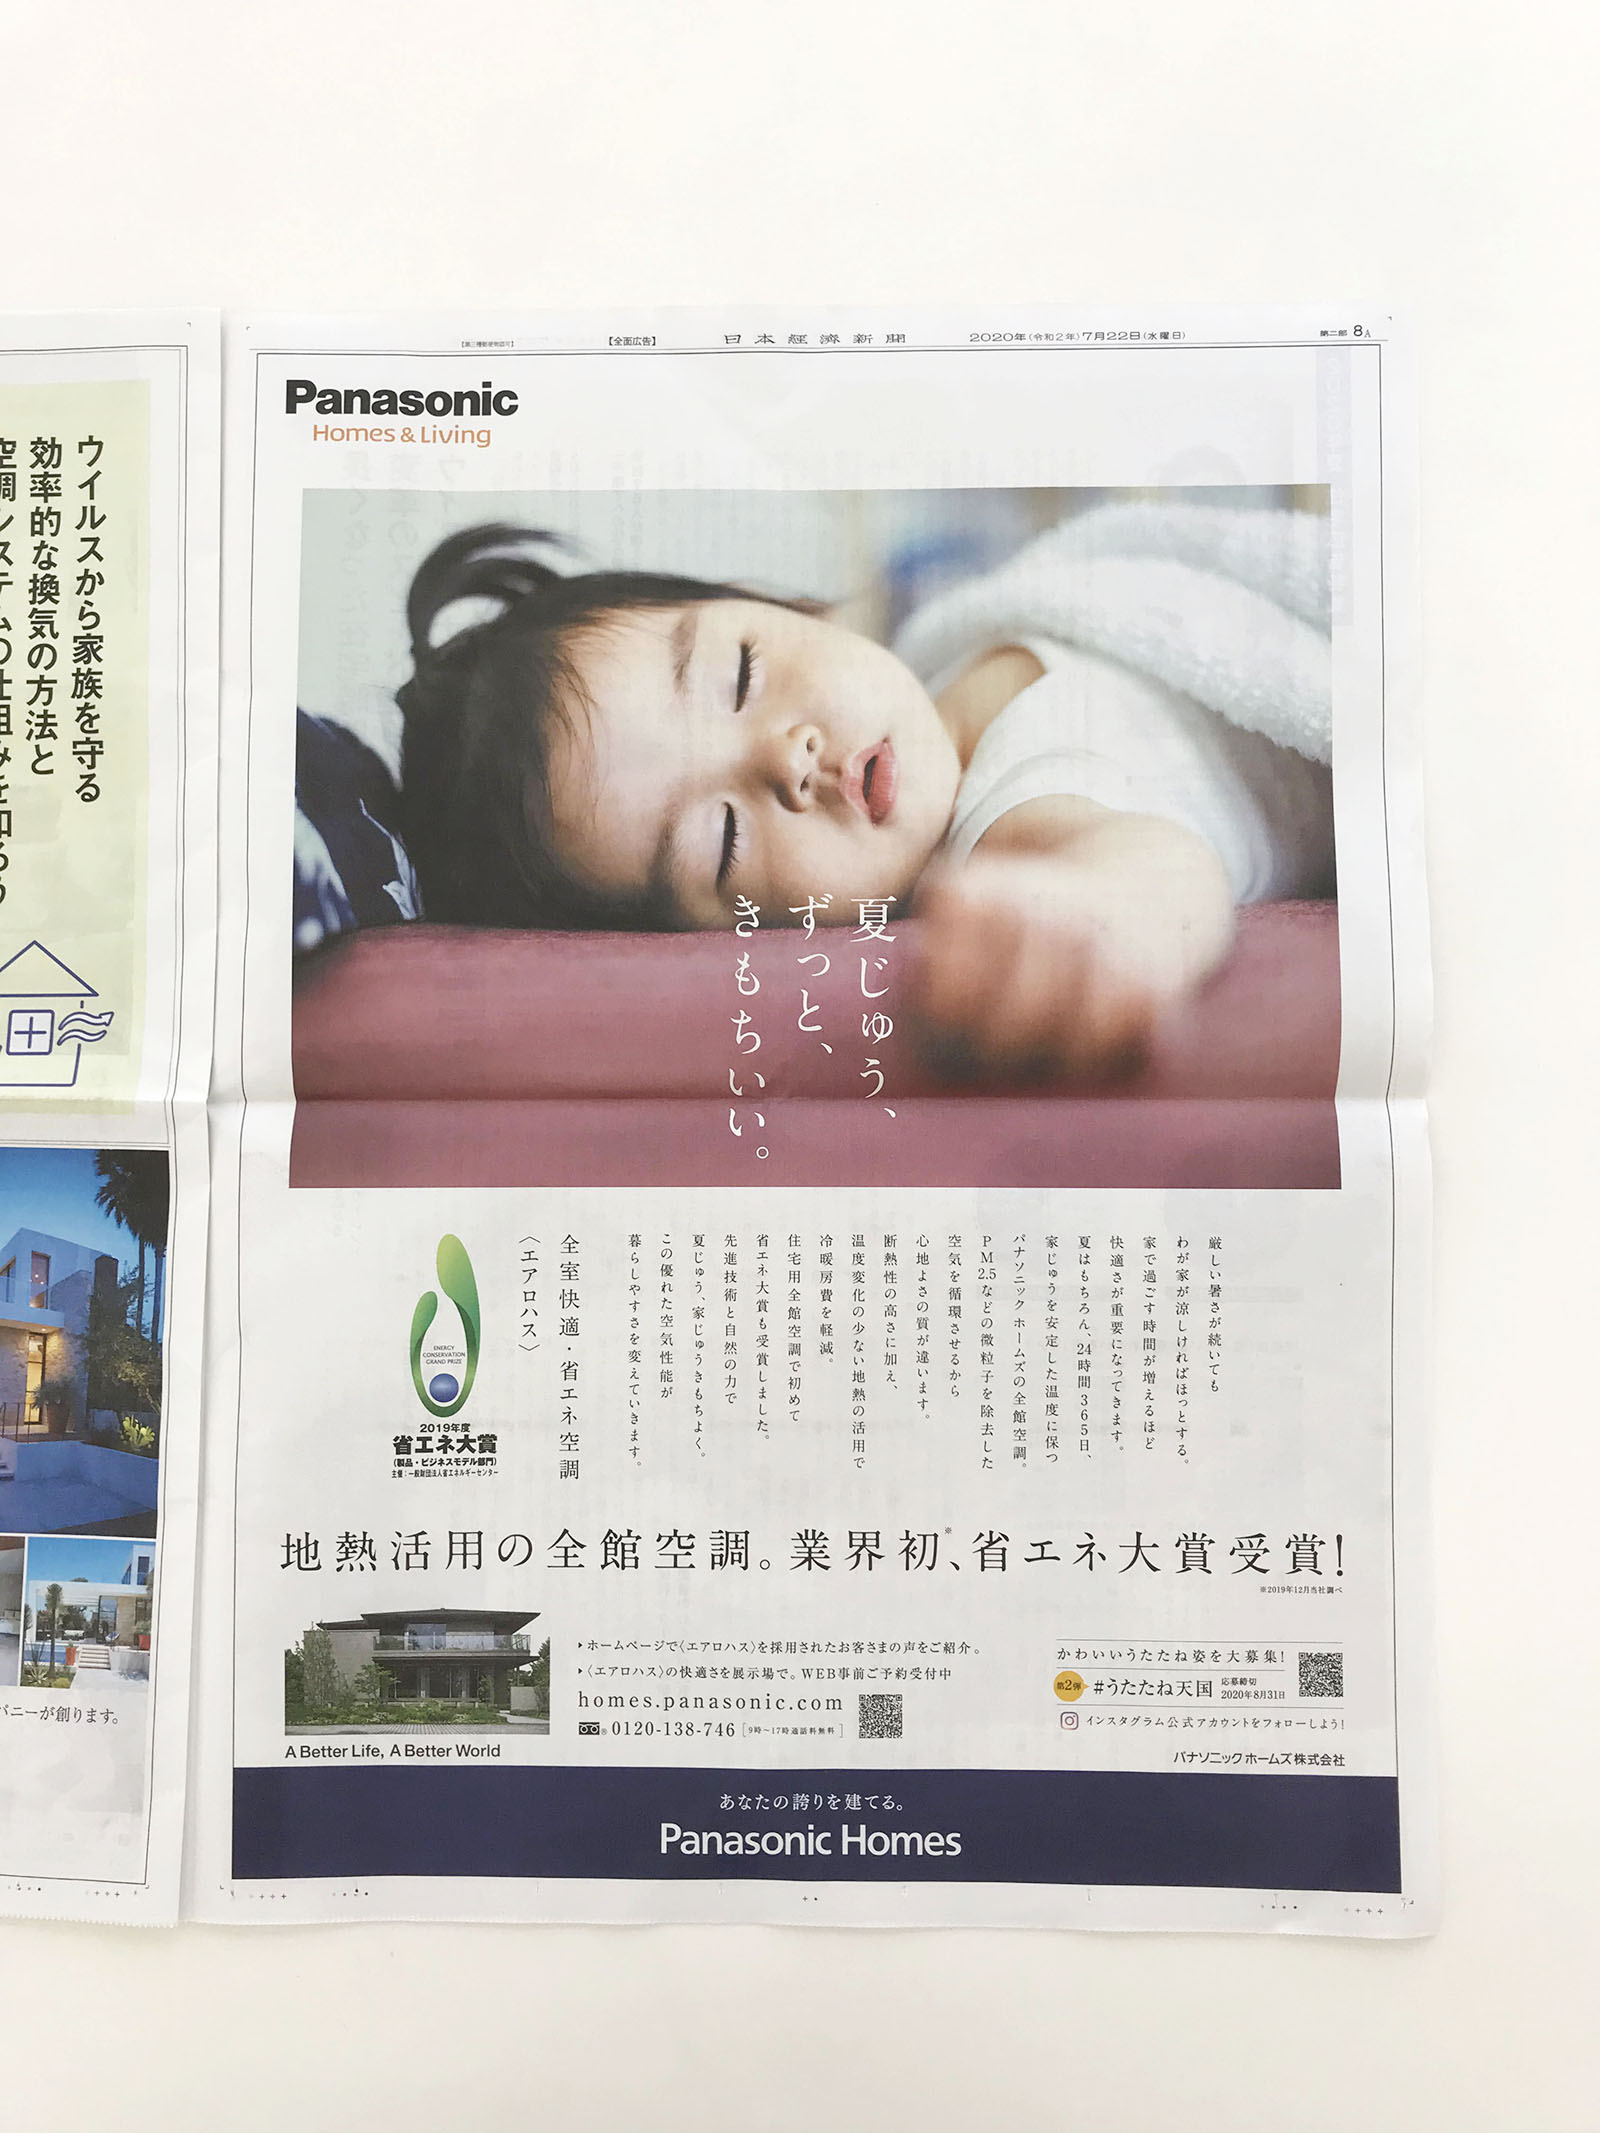 Panasonic Homes 企業広告 株式会社モノリス Monolith Inc 大阪市中央区の広告制作会社